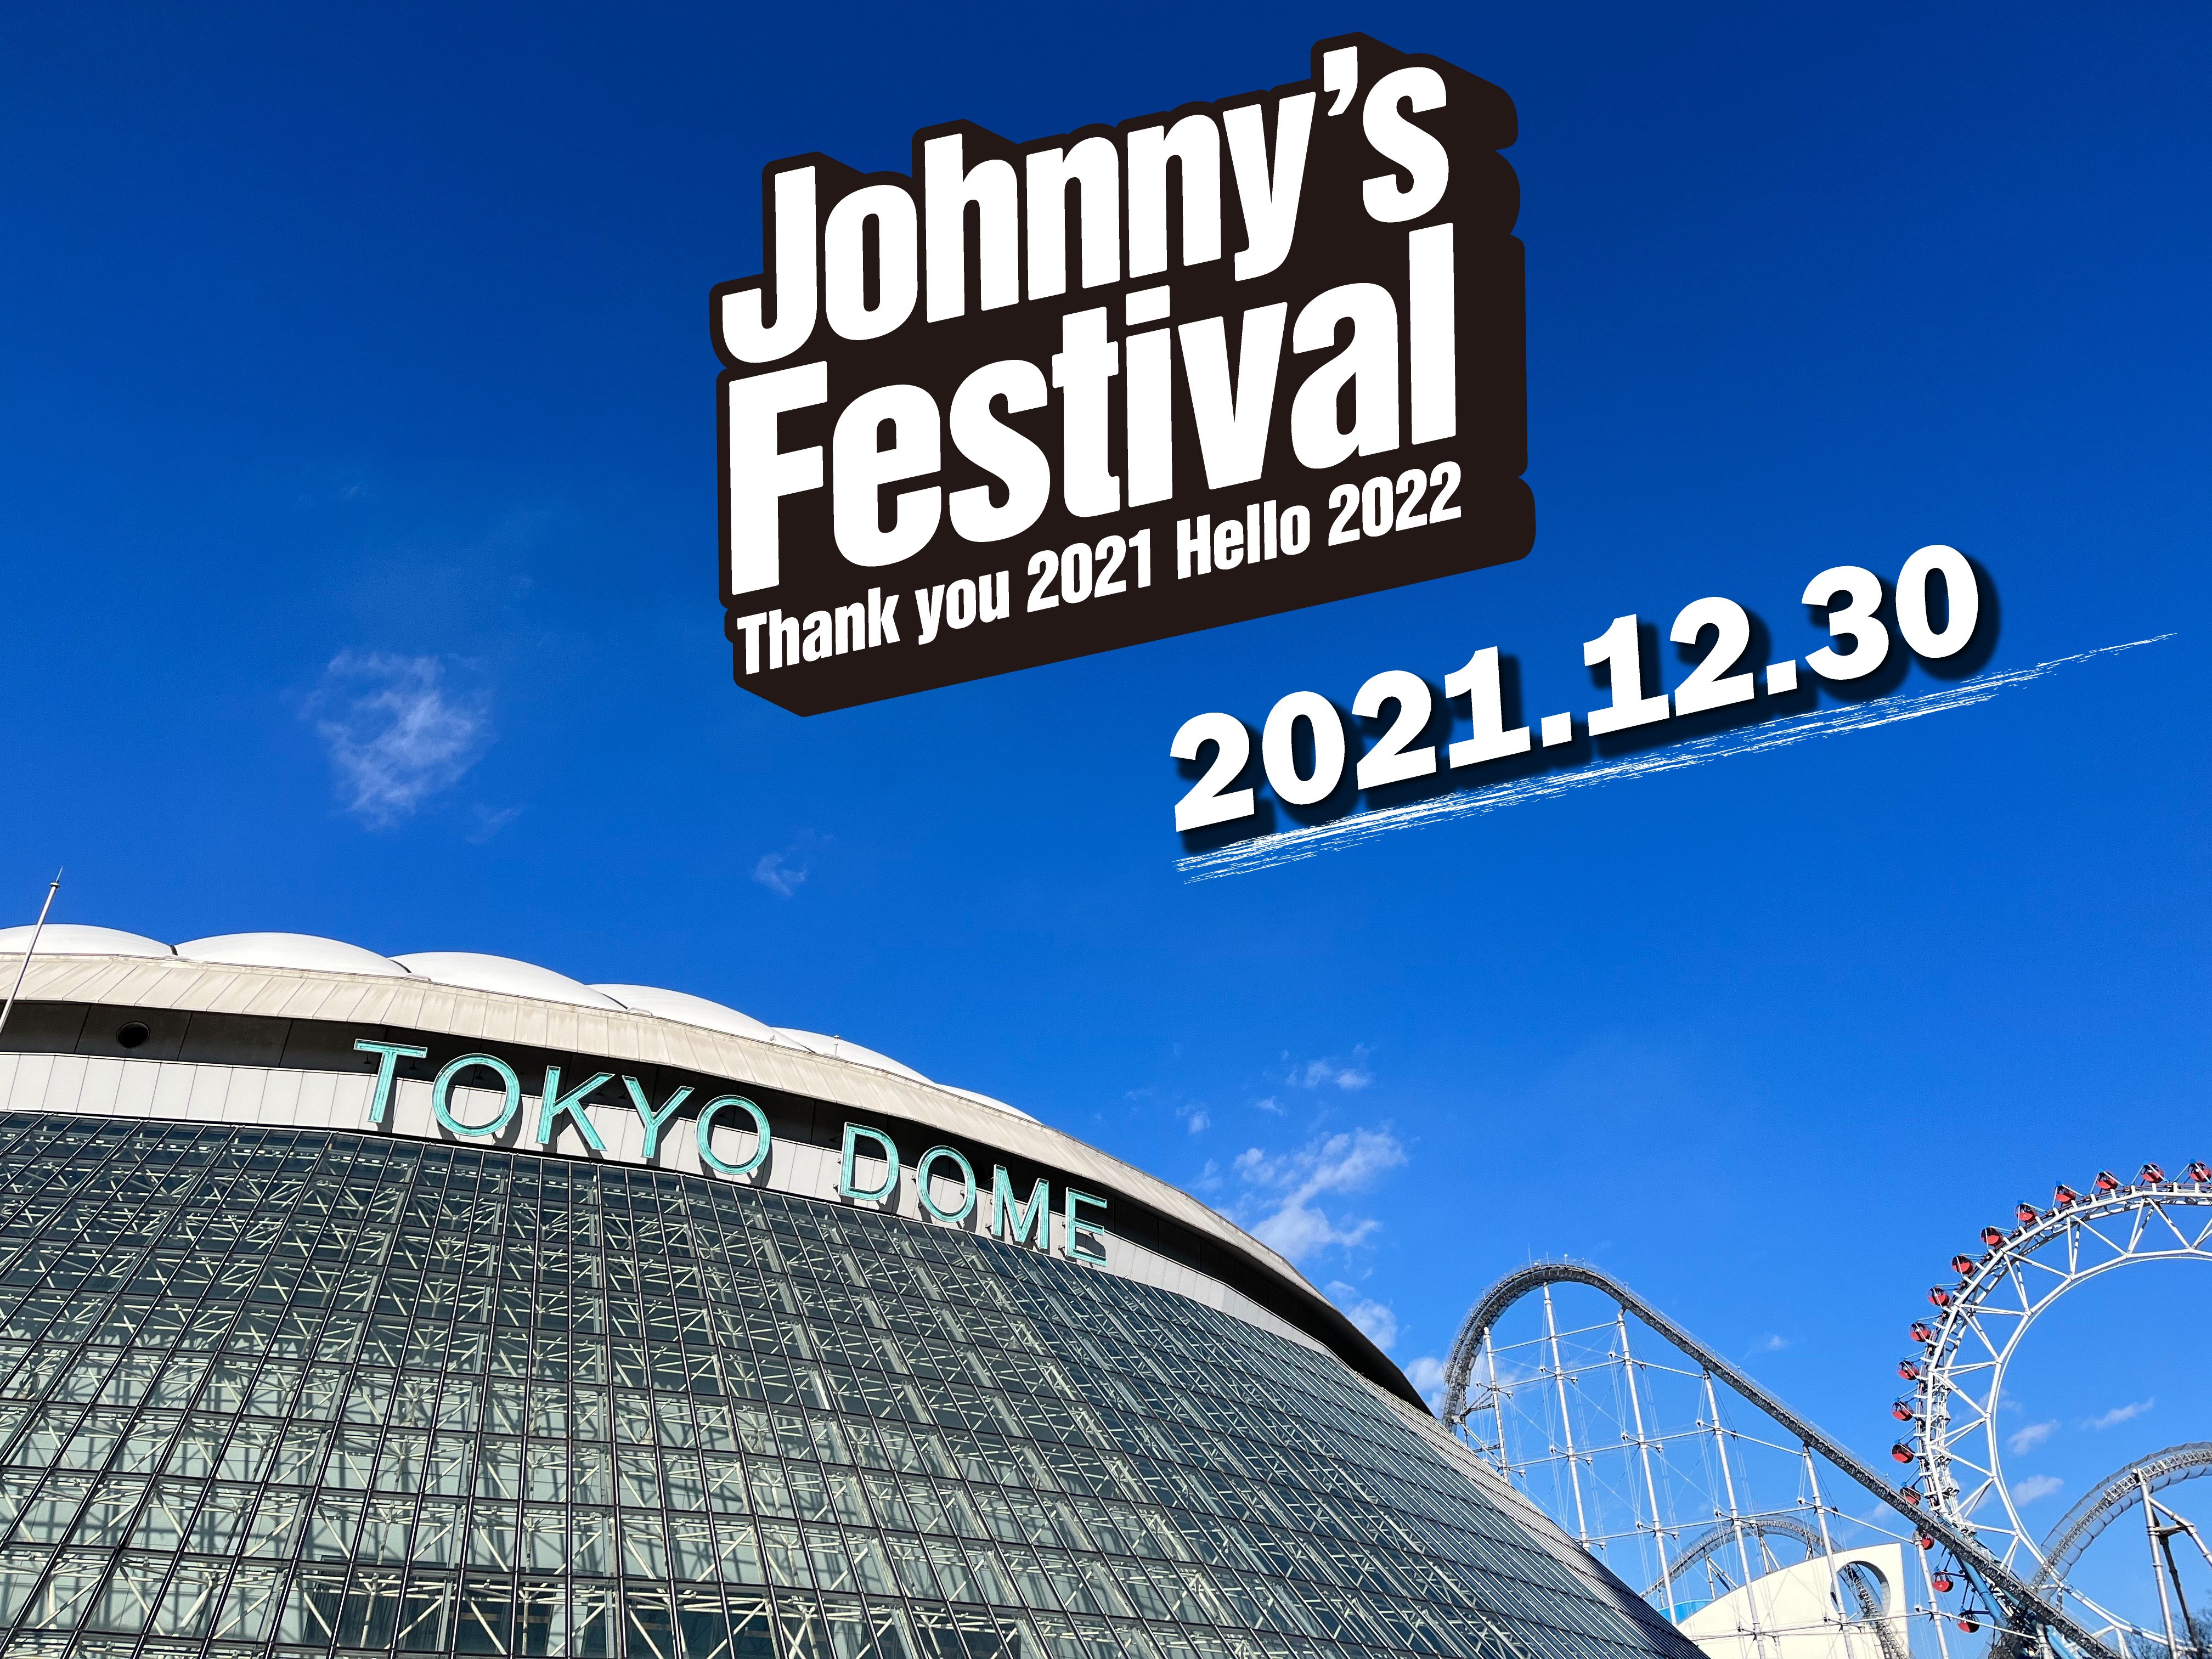 Johnny’s Festival   ジャニフェス